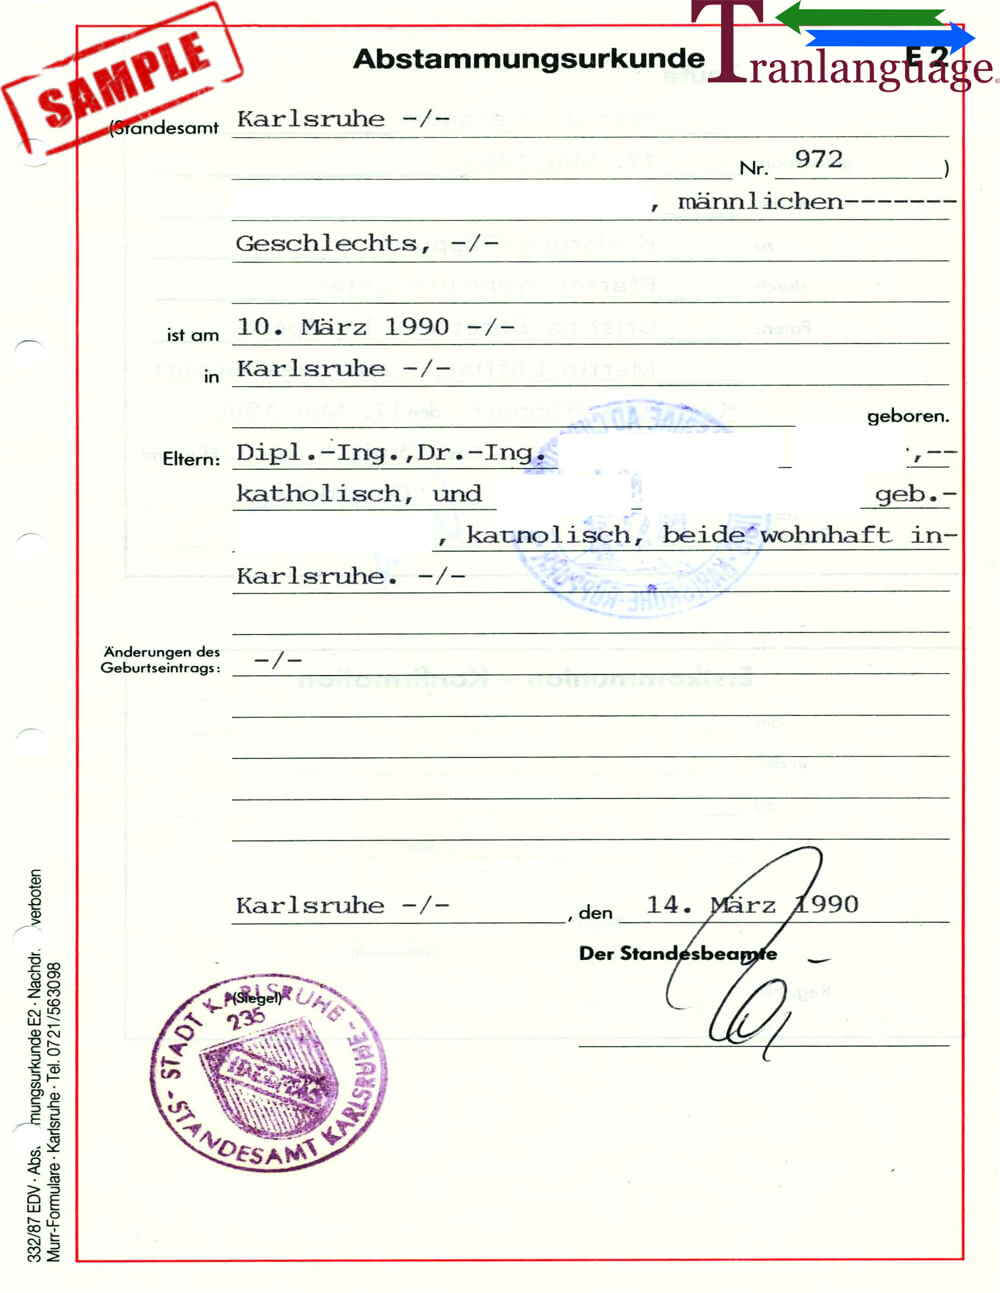 birth certificate notarized translation